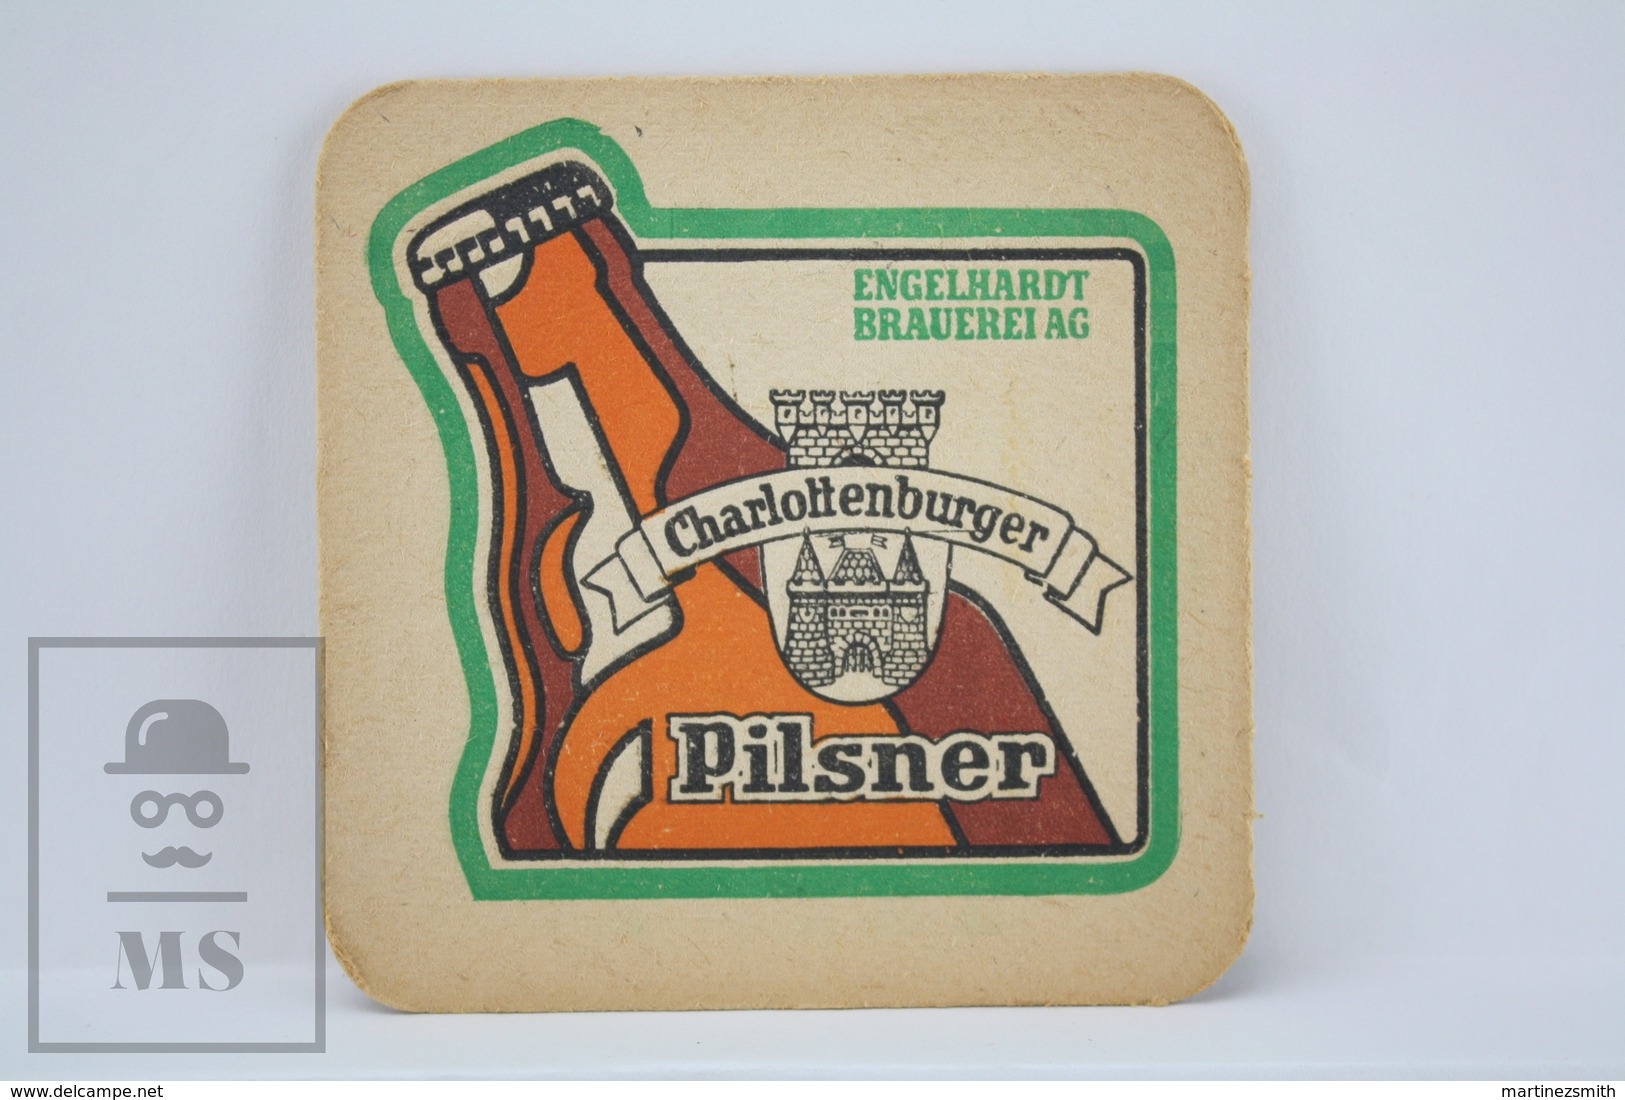 Vintage Beer Advtg Mat/ Coaster - Charlottenburger Pilsner - Engelhardt Brauerei - Portavasos